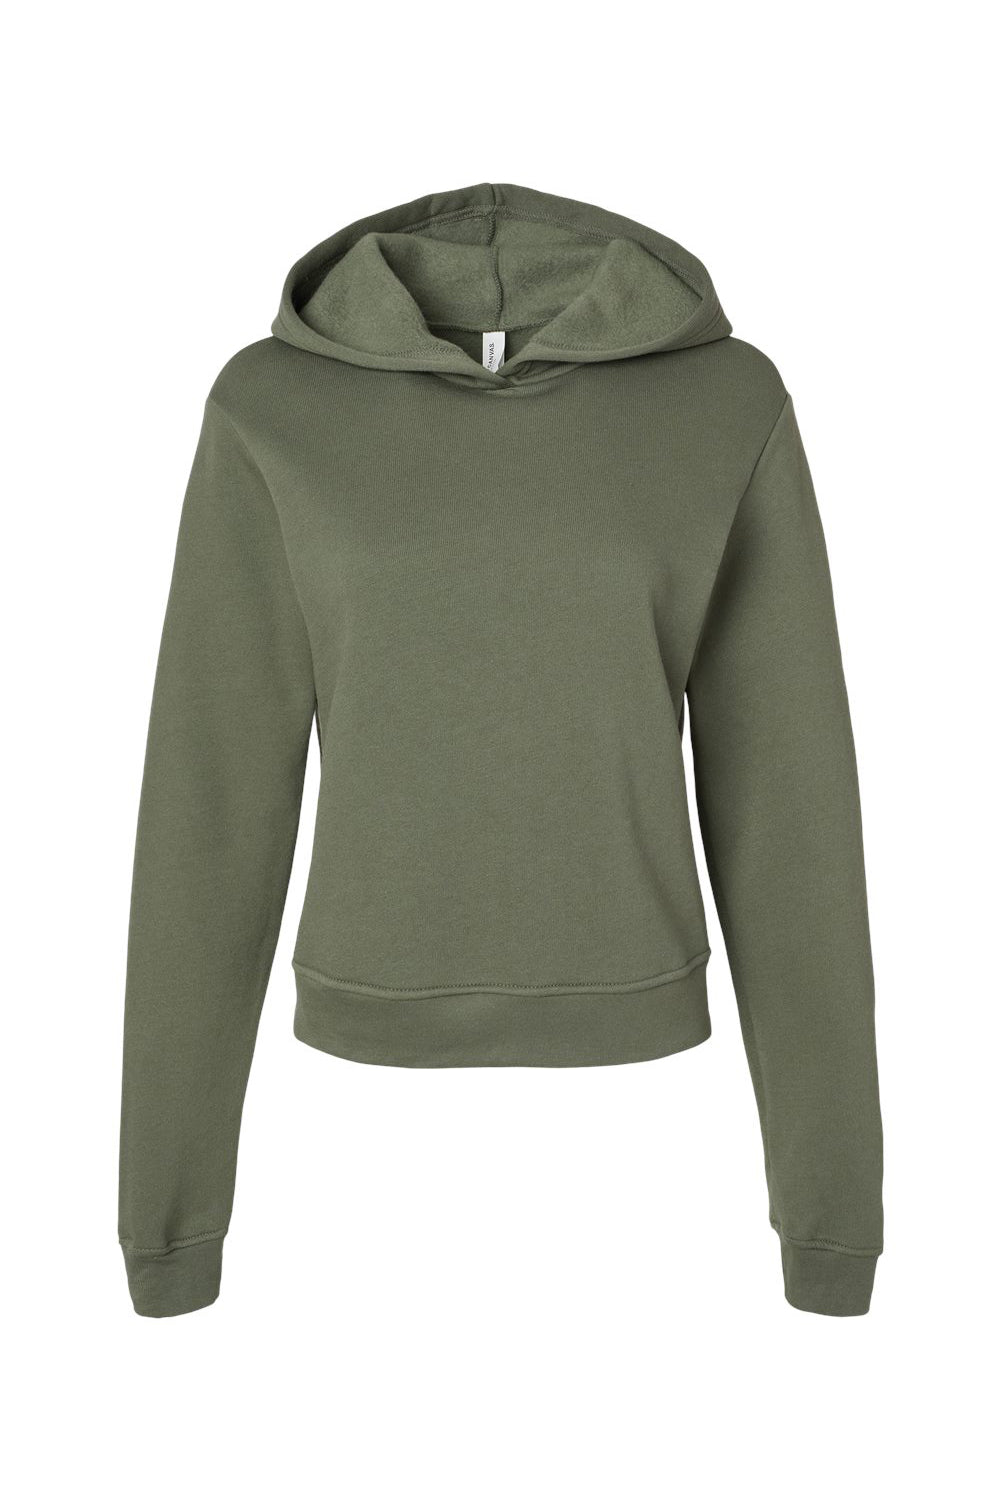 Bella + Canvas 7519 Womens Classic Hooded Sweatshirt Hoodie Military Green Flat Front